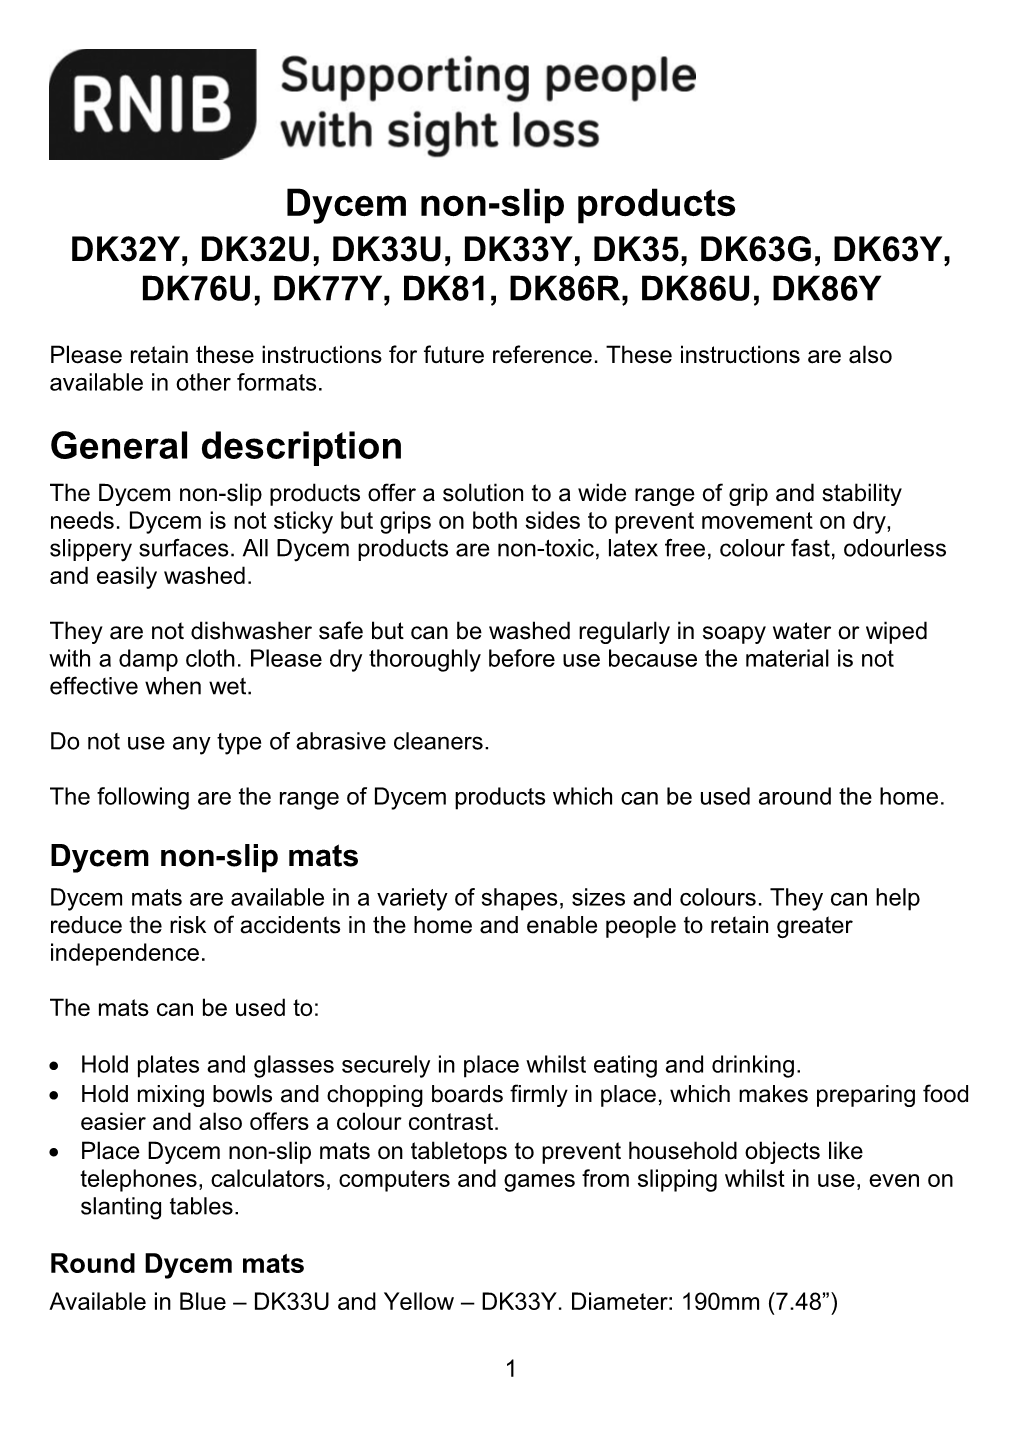 Dycem Non-Slip Products